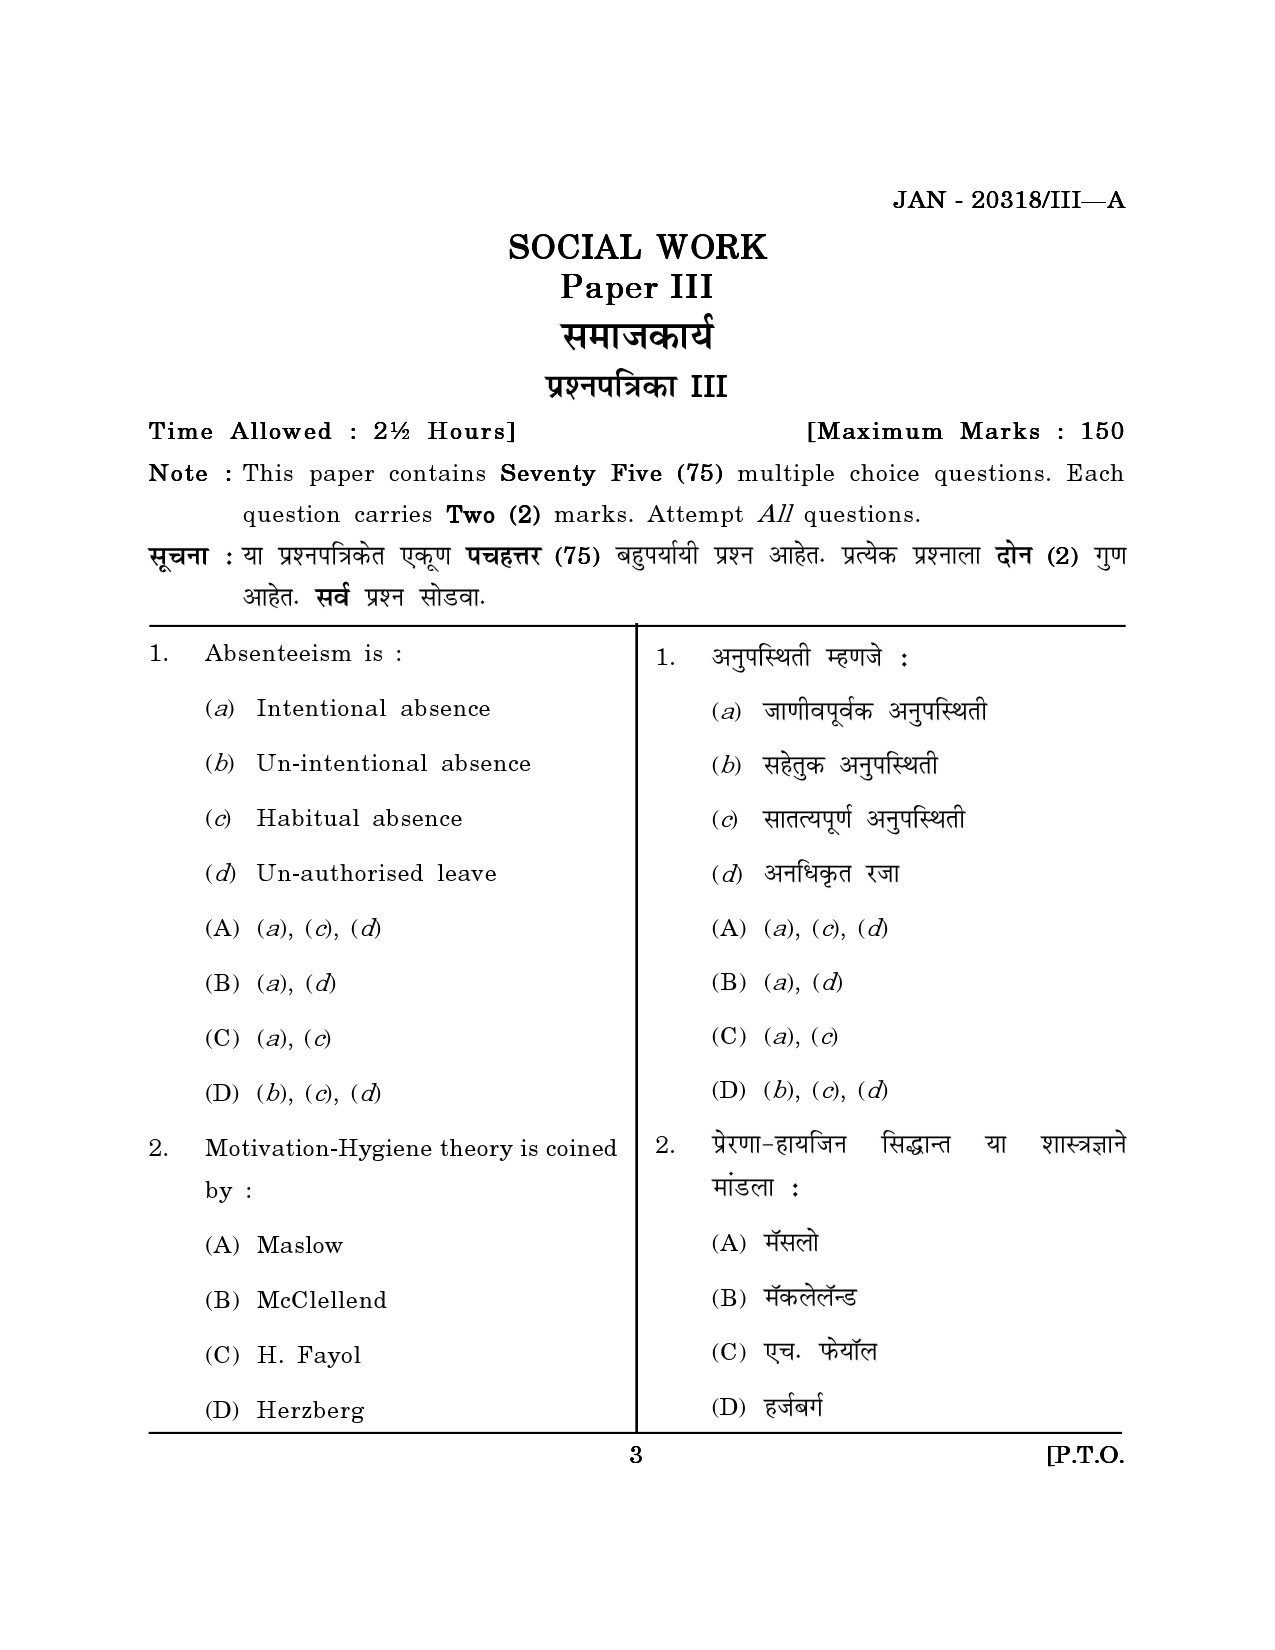 Maharashtra SET Social Work Question Paper III January 2018 2